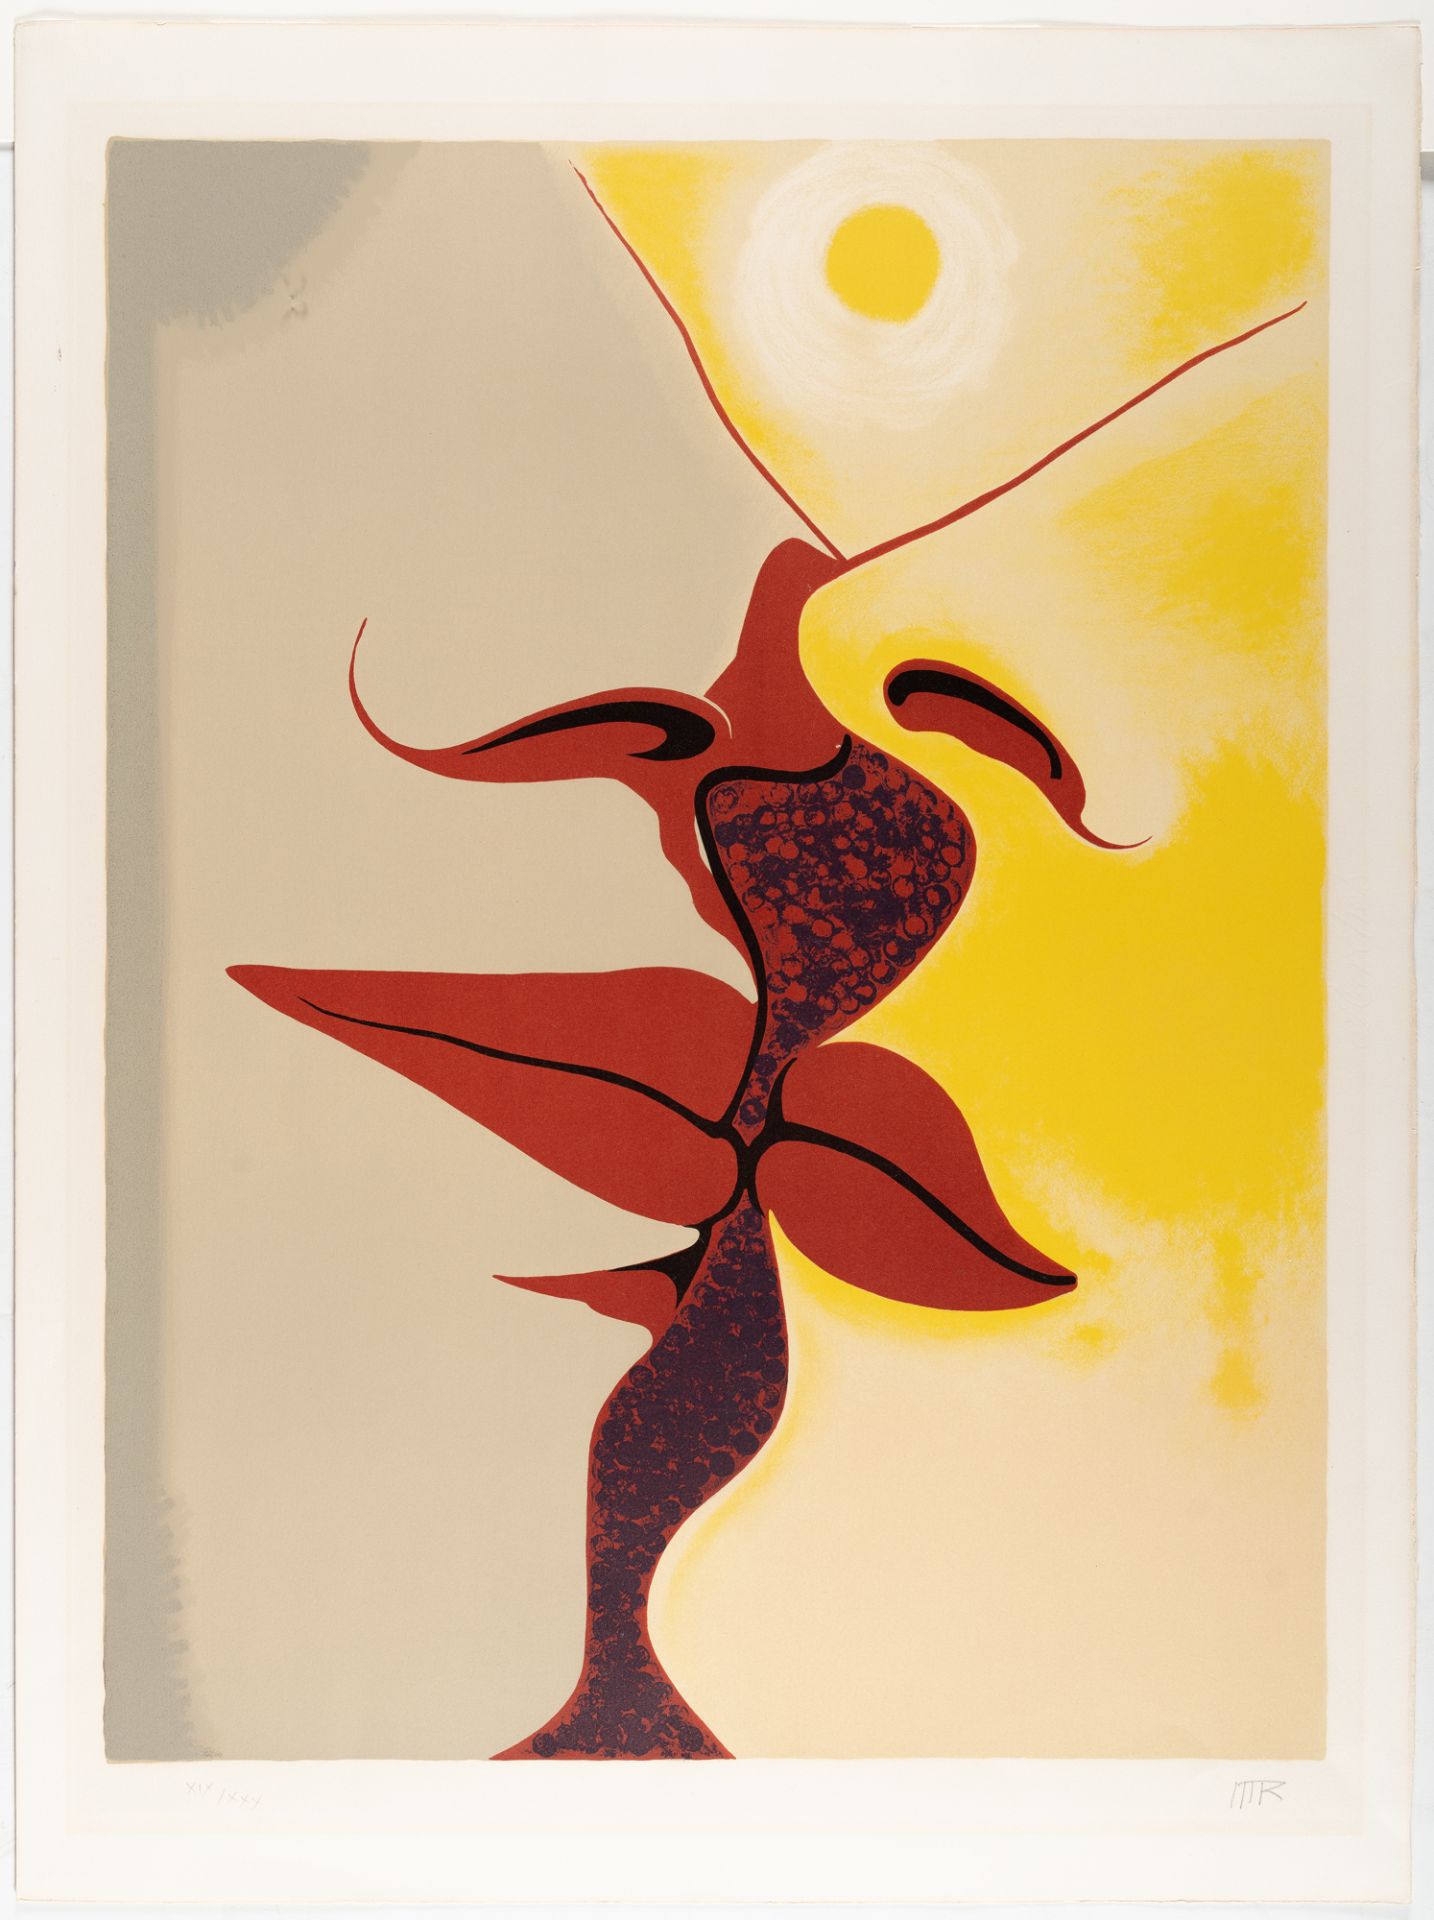 Man Ray (Emmanuel Radnitzky) (1890 Philadelphia - Paris 1976) – Images a Deux Faces